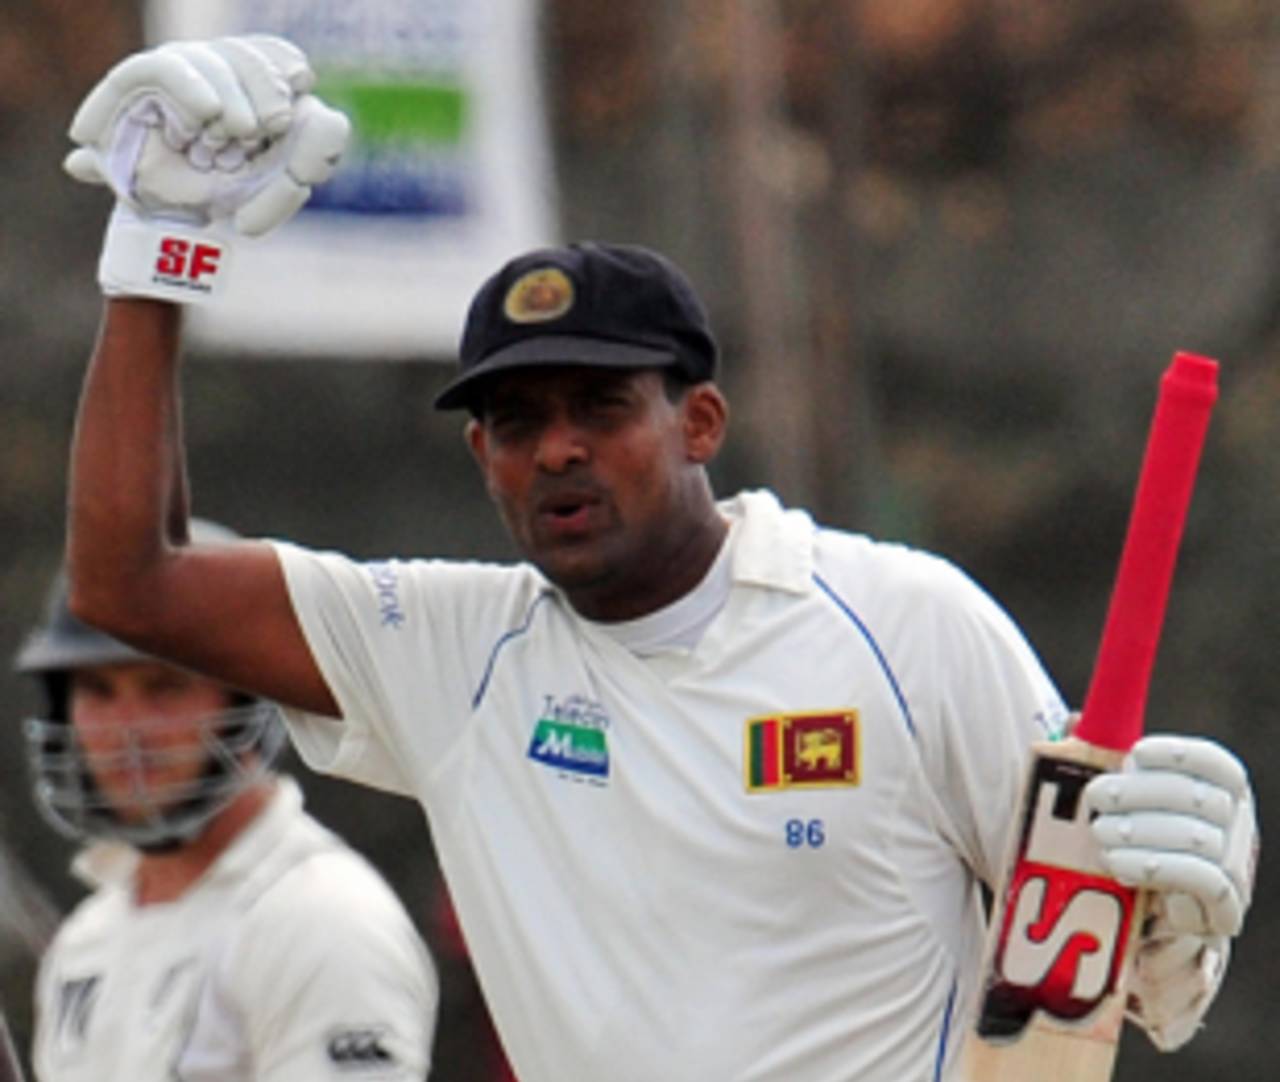 Thilan Samaraweera reaches his tenth Test century, Sri Lanka v New Zealand, 1st Test, Galle, 2nd day, August 19, 2009